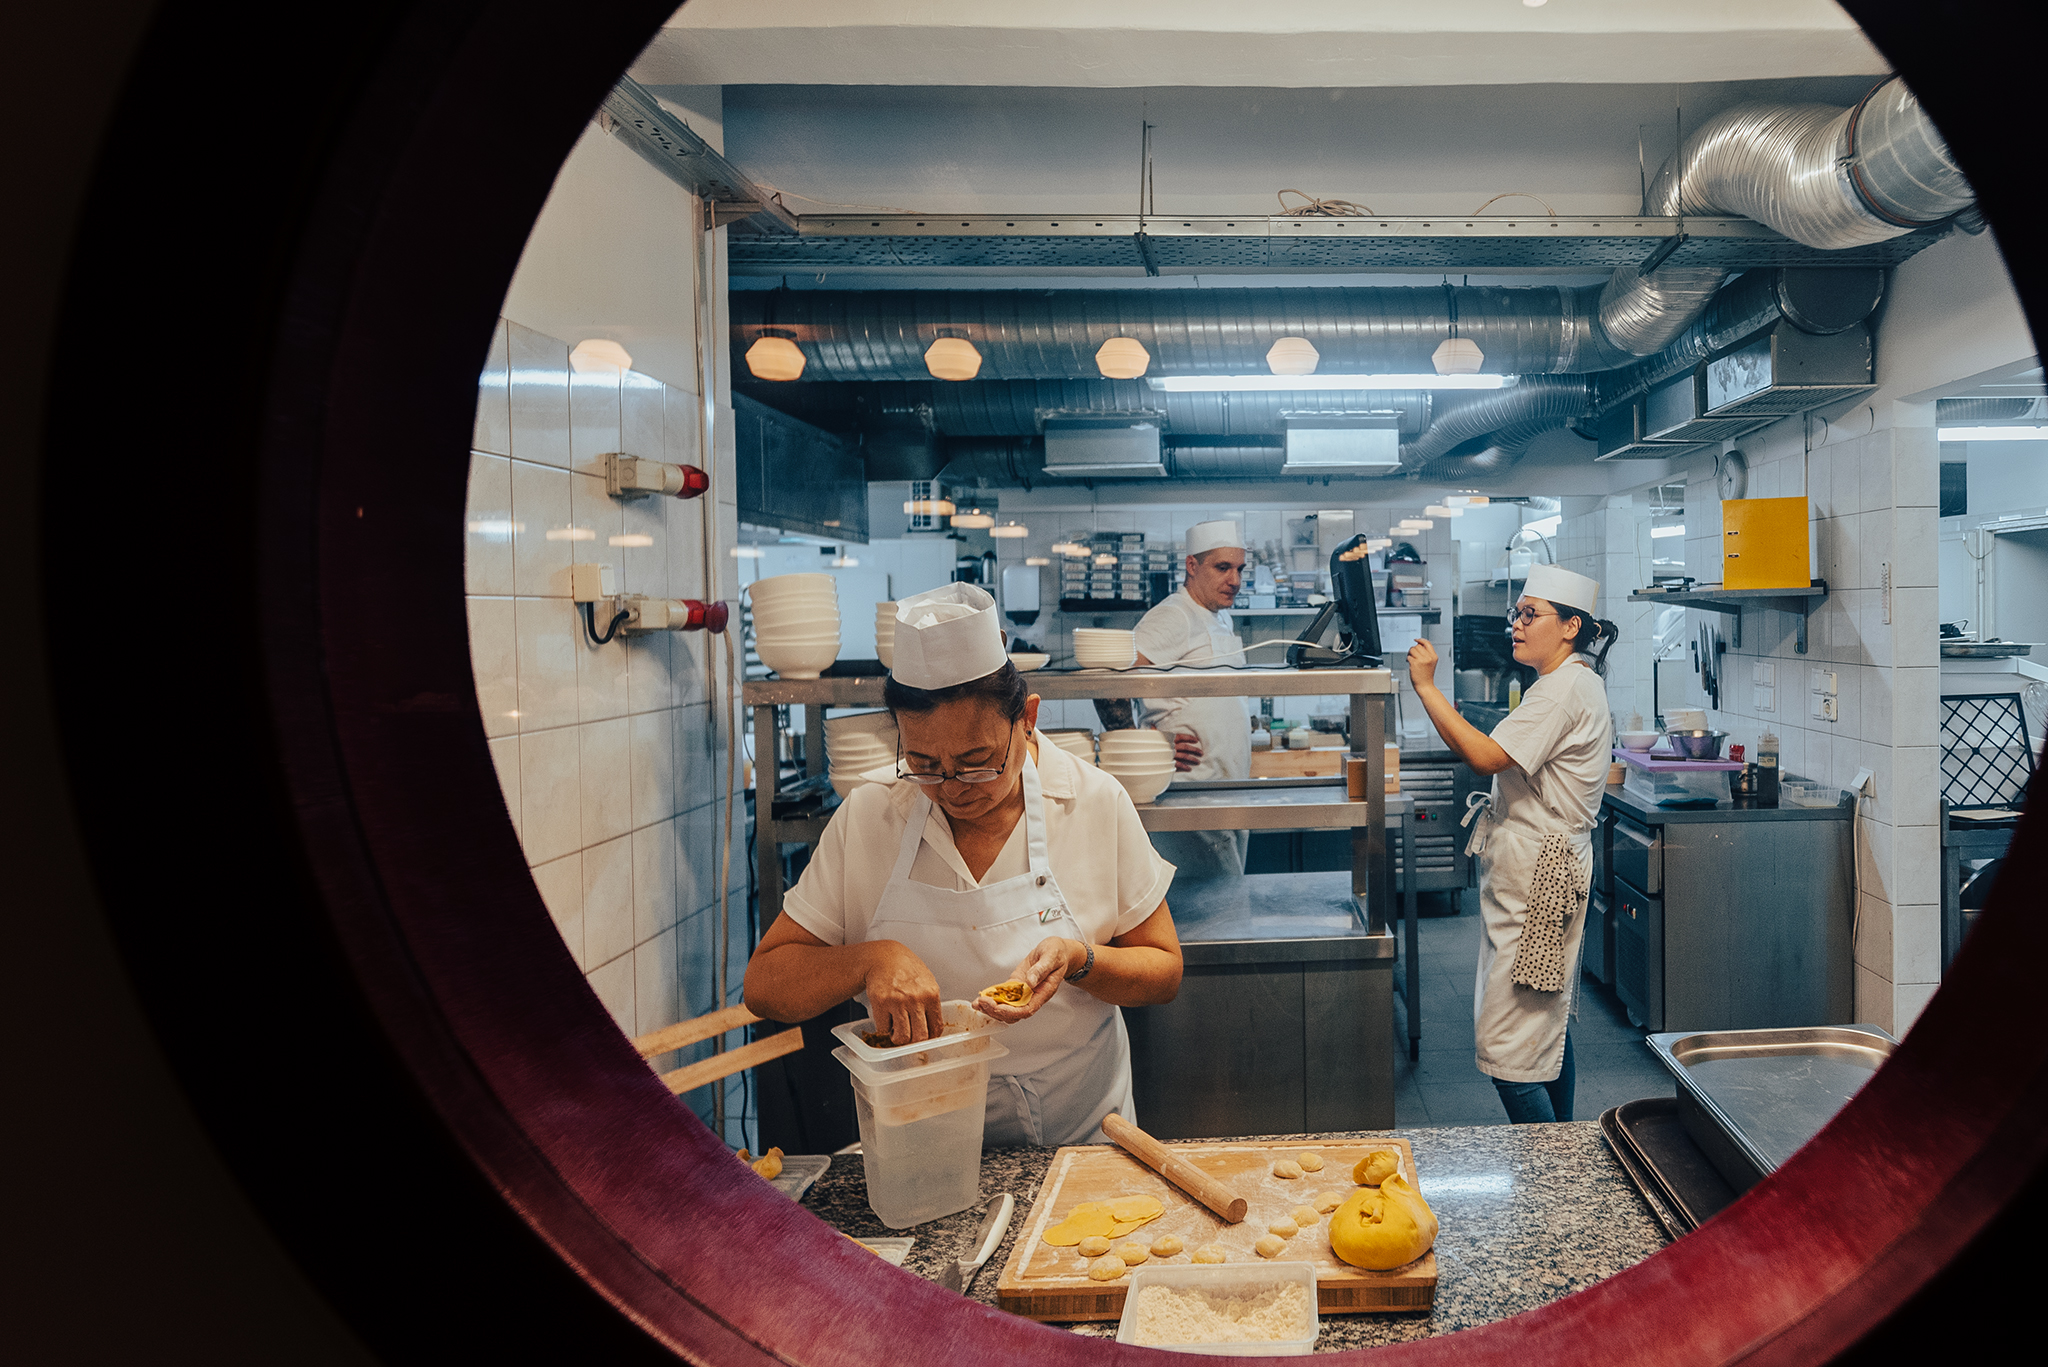 101Tigris – An Asian canteen that serves better and cheaper than wok chains